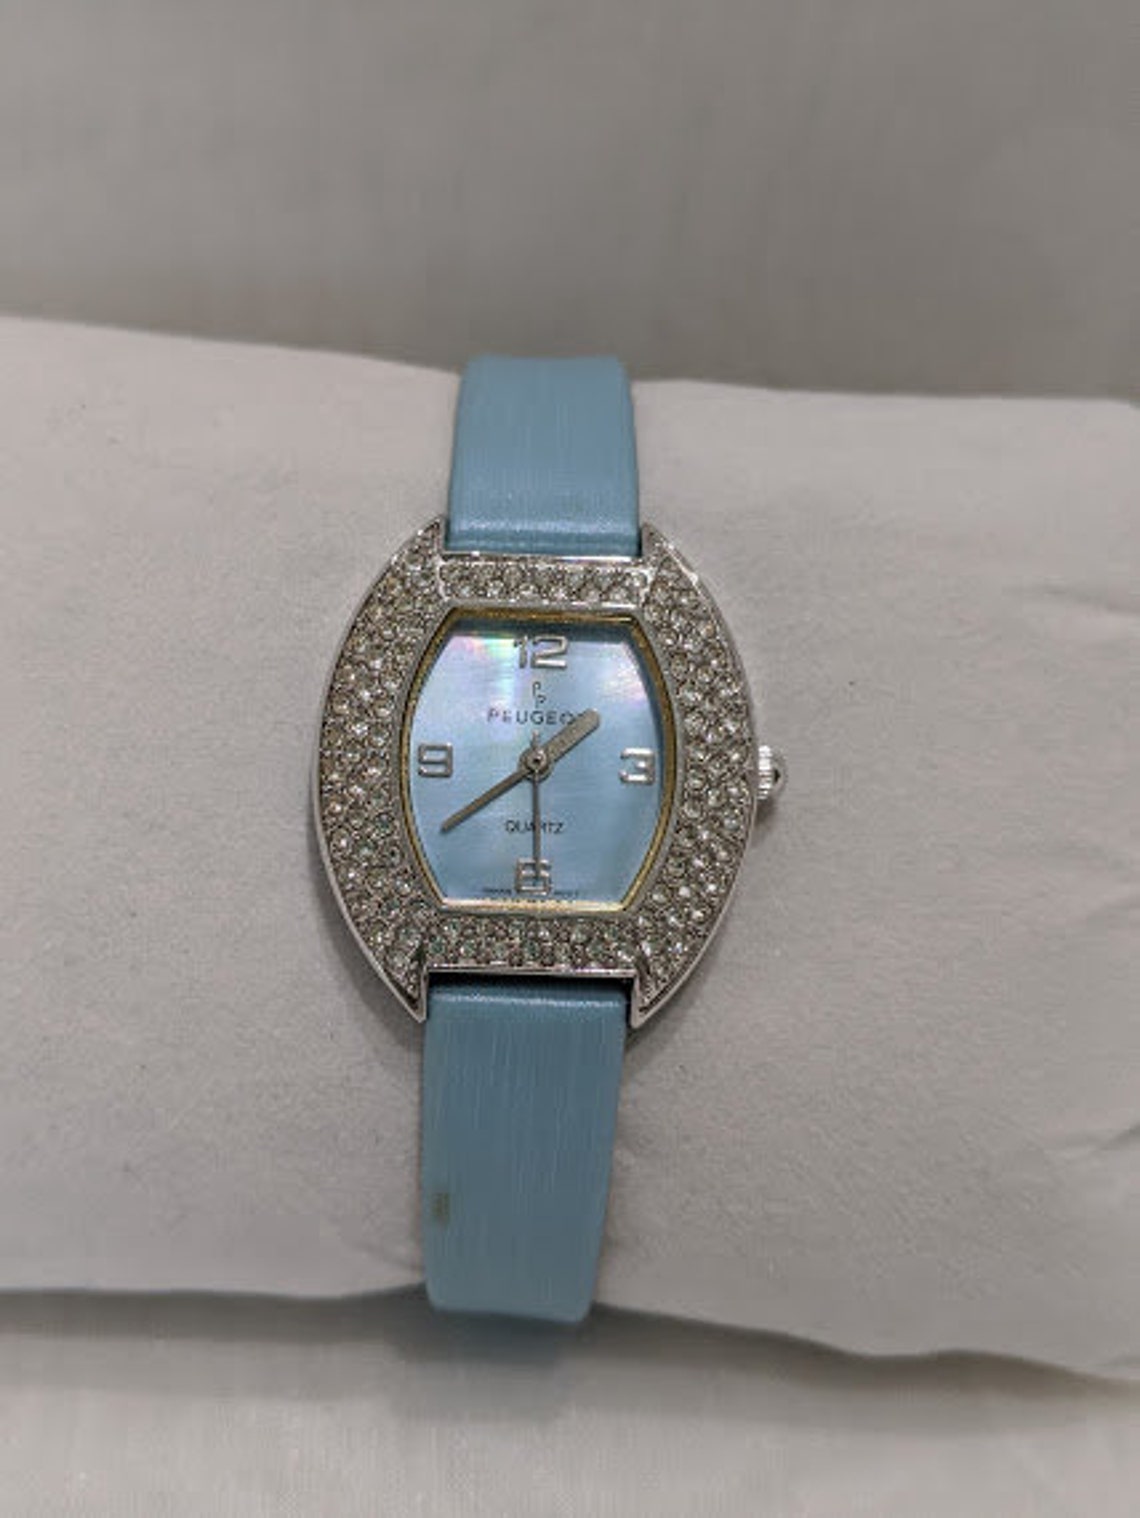 Peugeot Quartz Women's Wrist Watch. Blue Crystal Bezel | Etsy